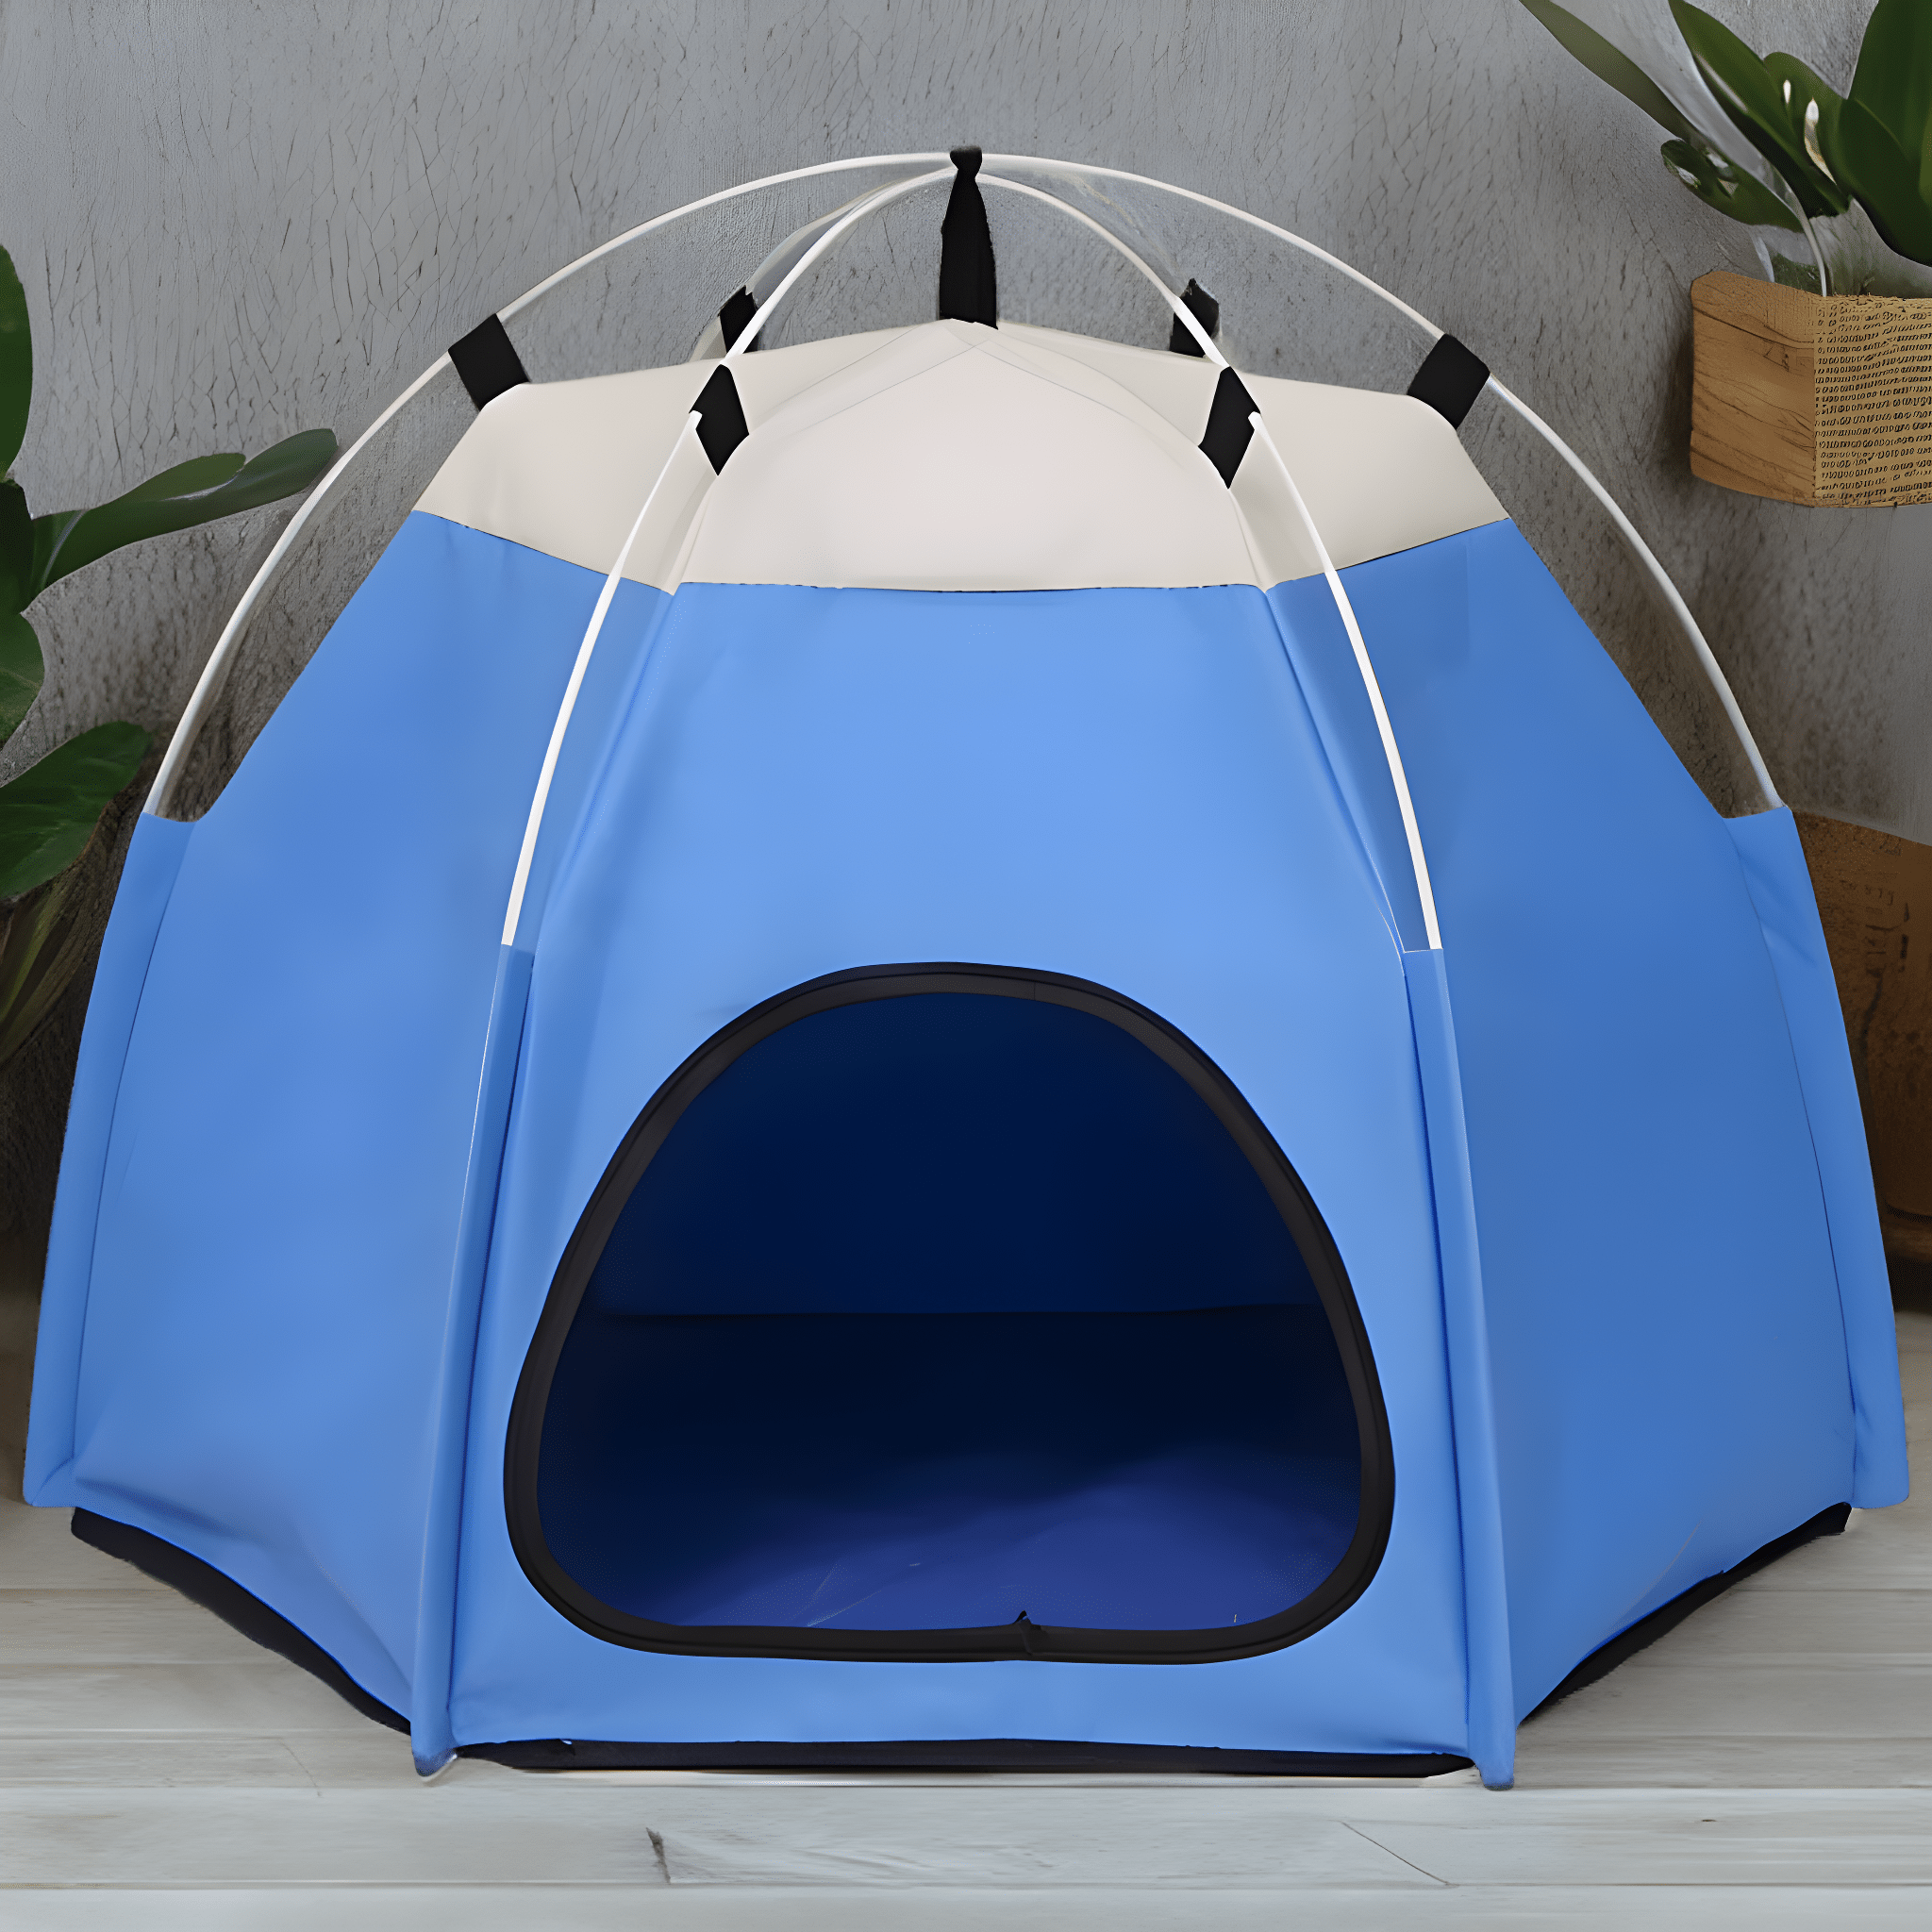 The Tiny Cat Tent